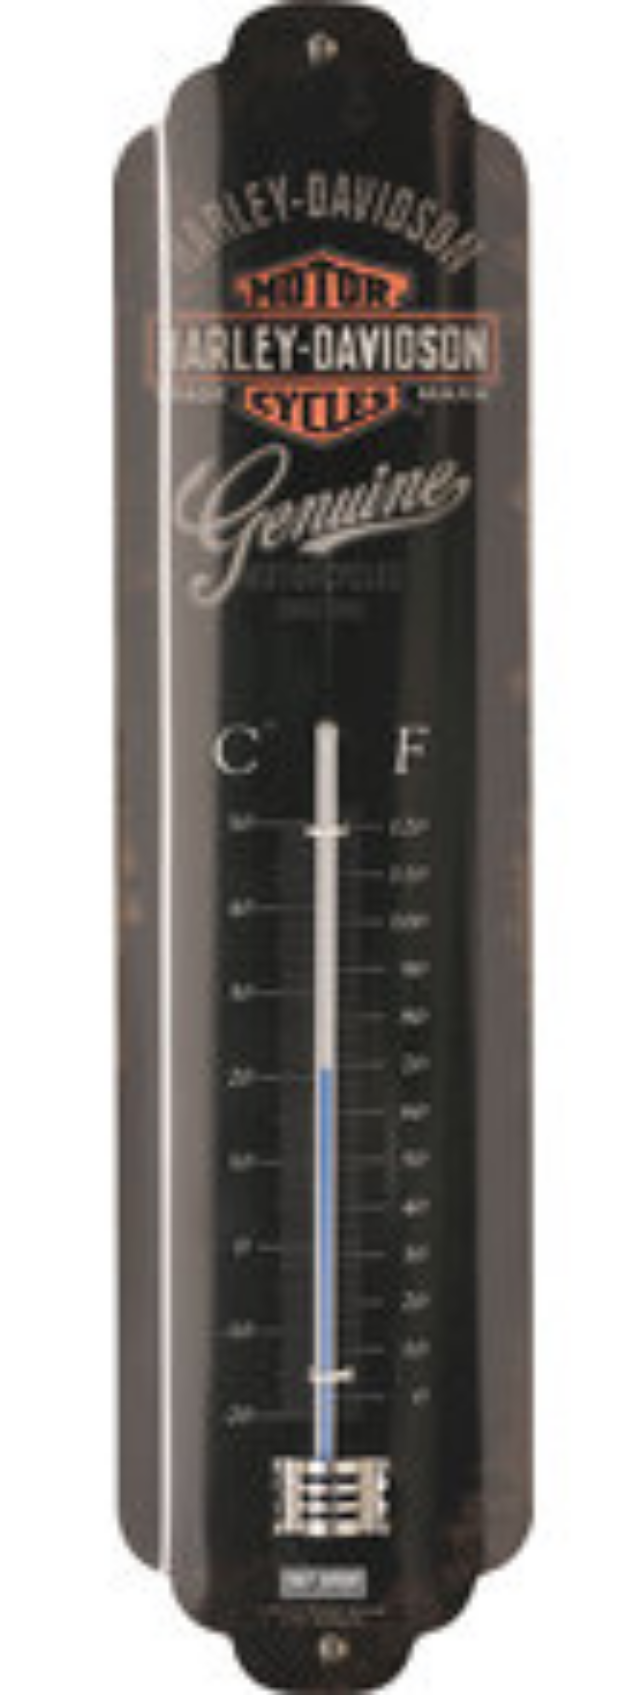 thermometre-harley-davidson-noir